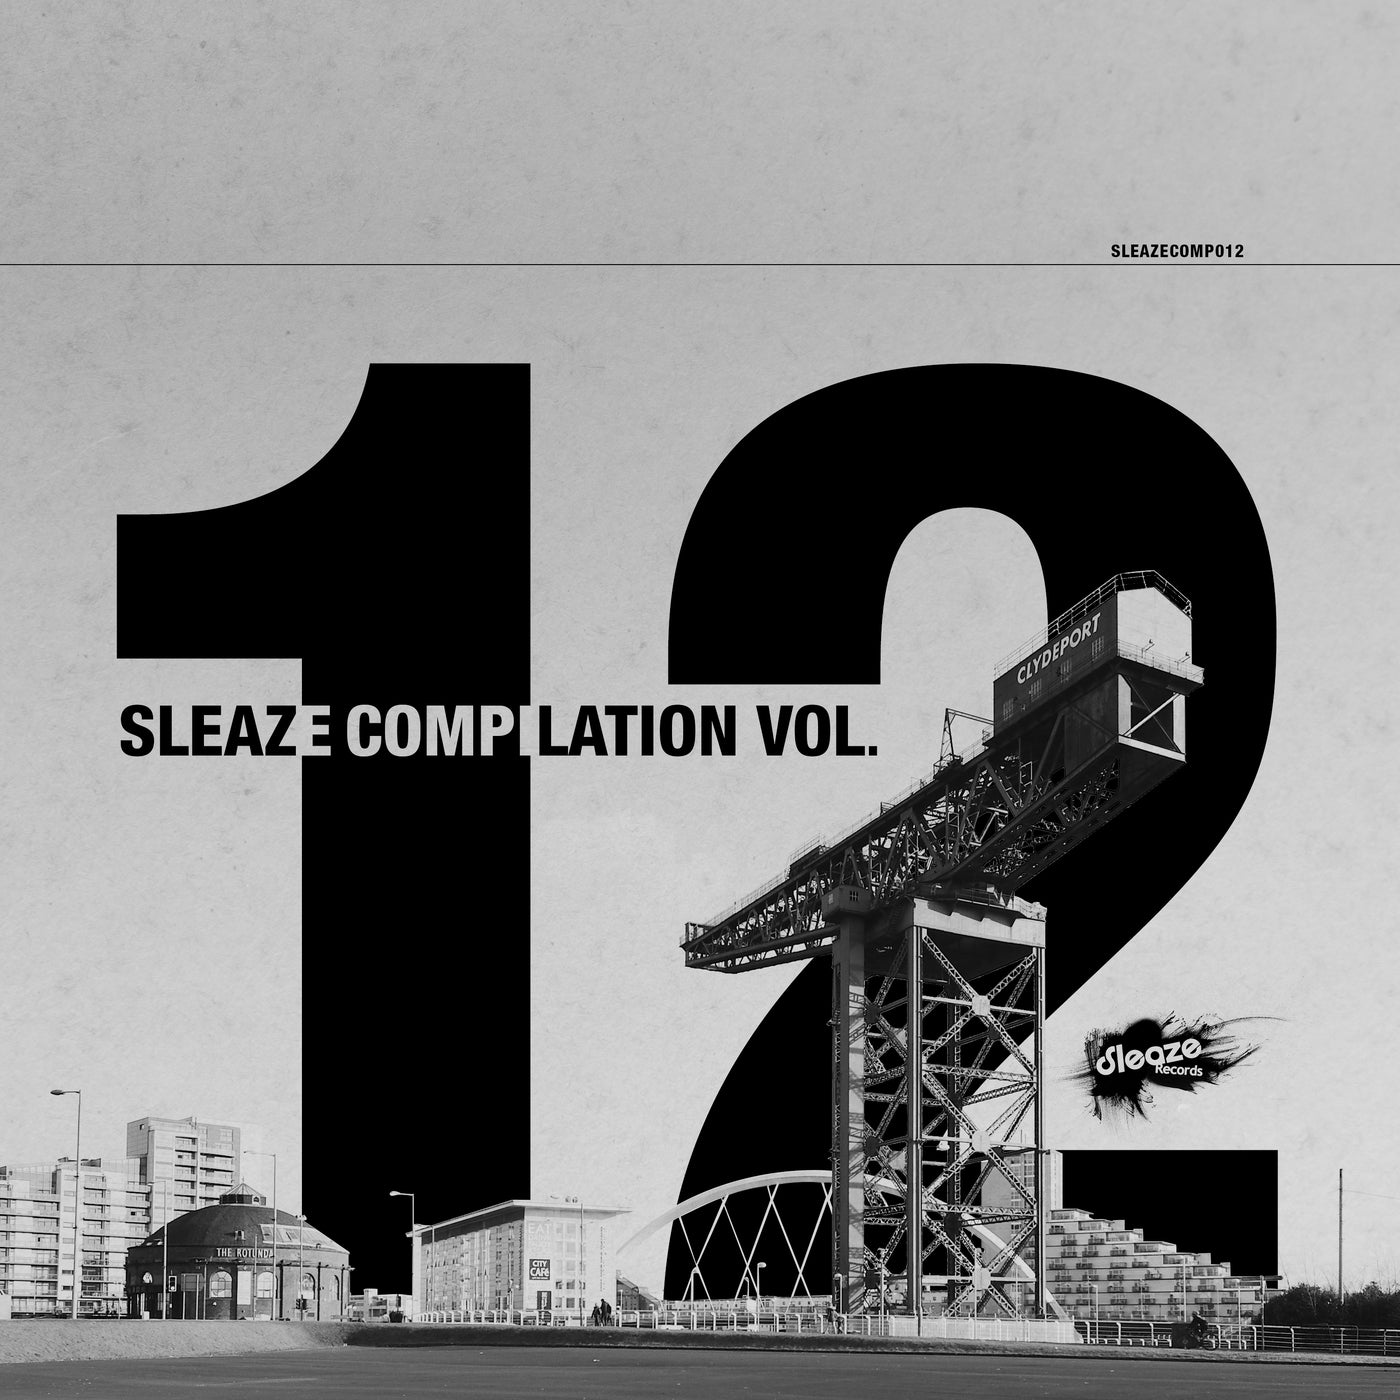 VA – Sleaze Compilation, Vol. 12 [SLEAZECOMP012]